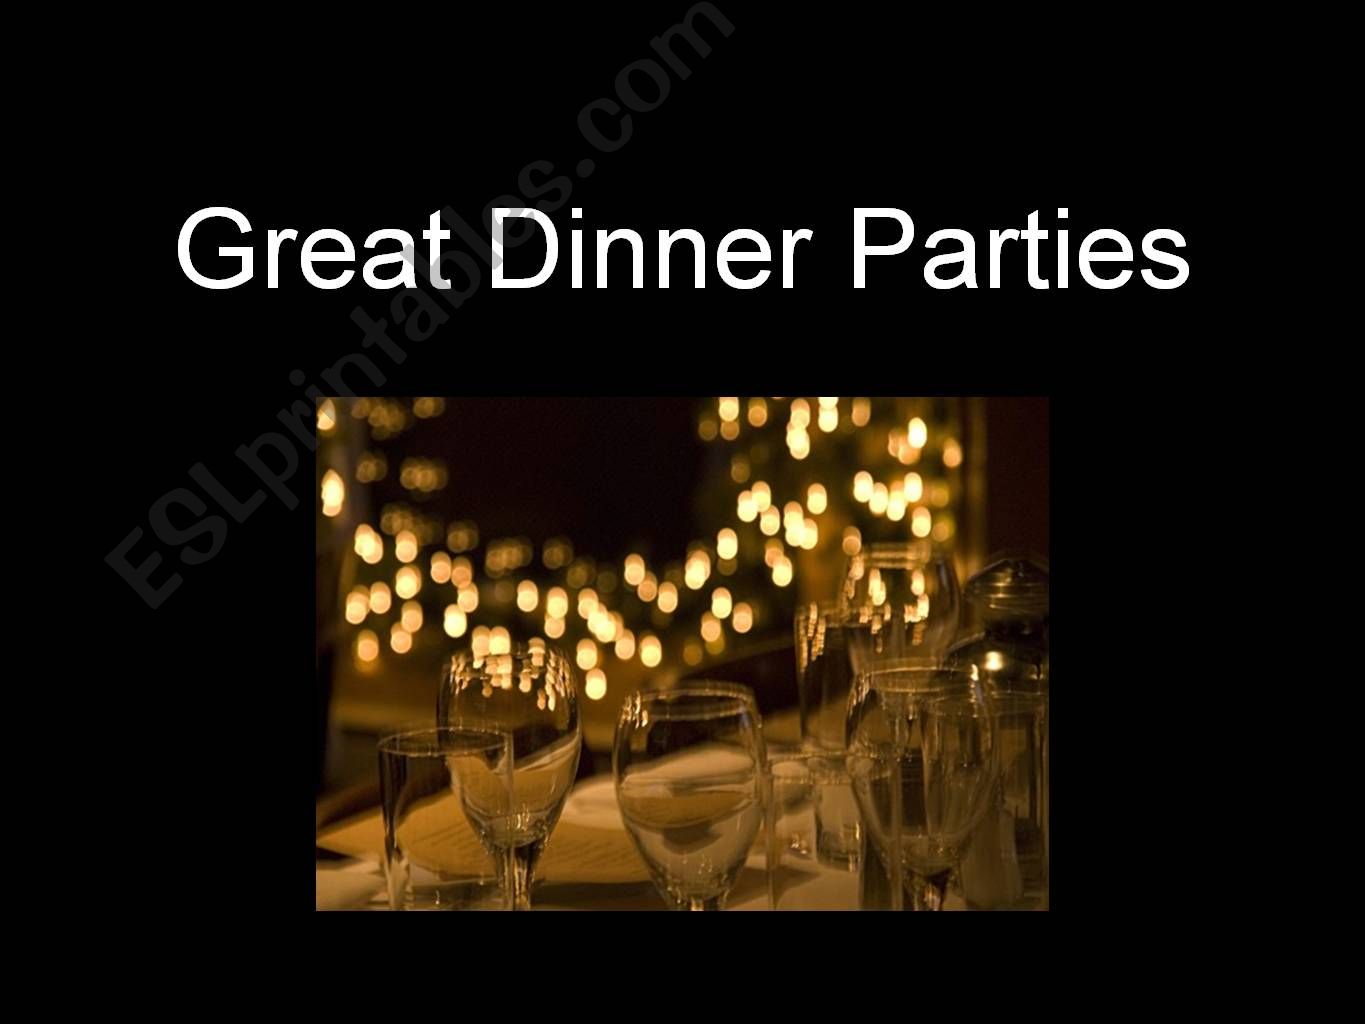 Great Dinner Parties  powerpoint